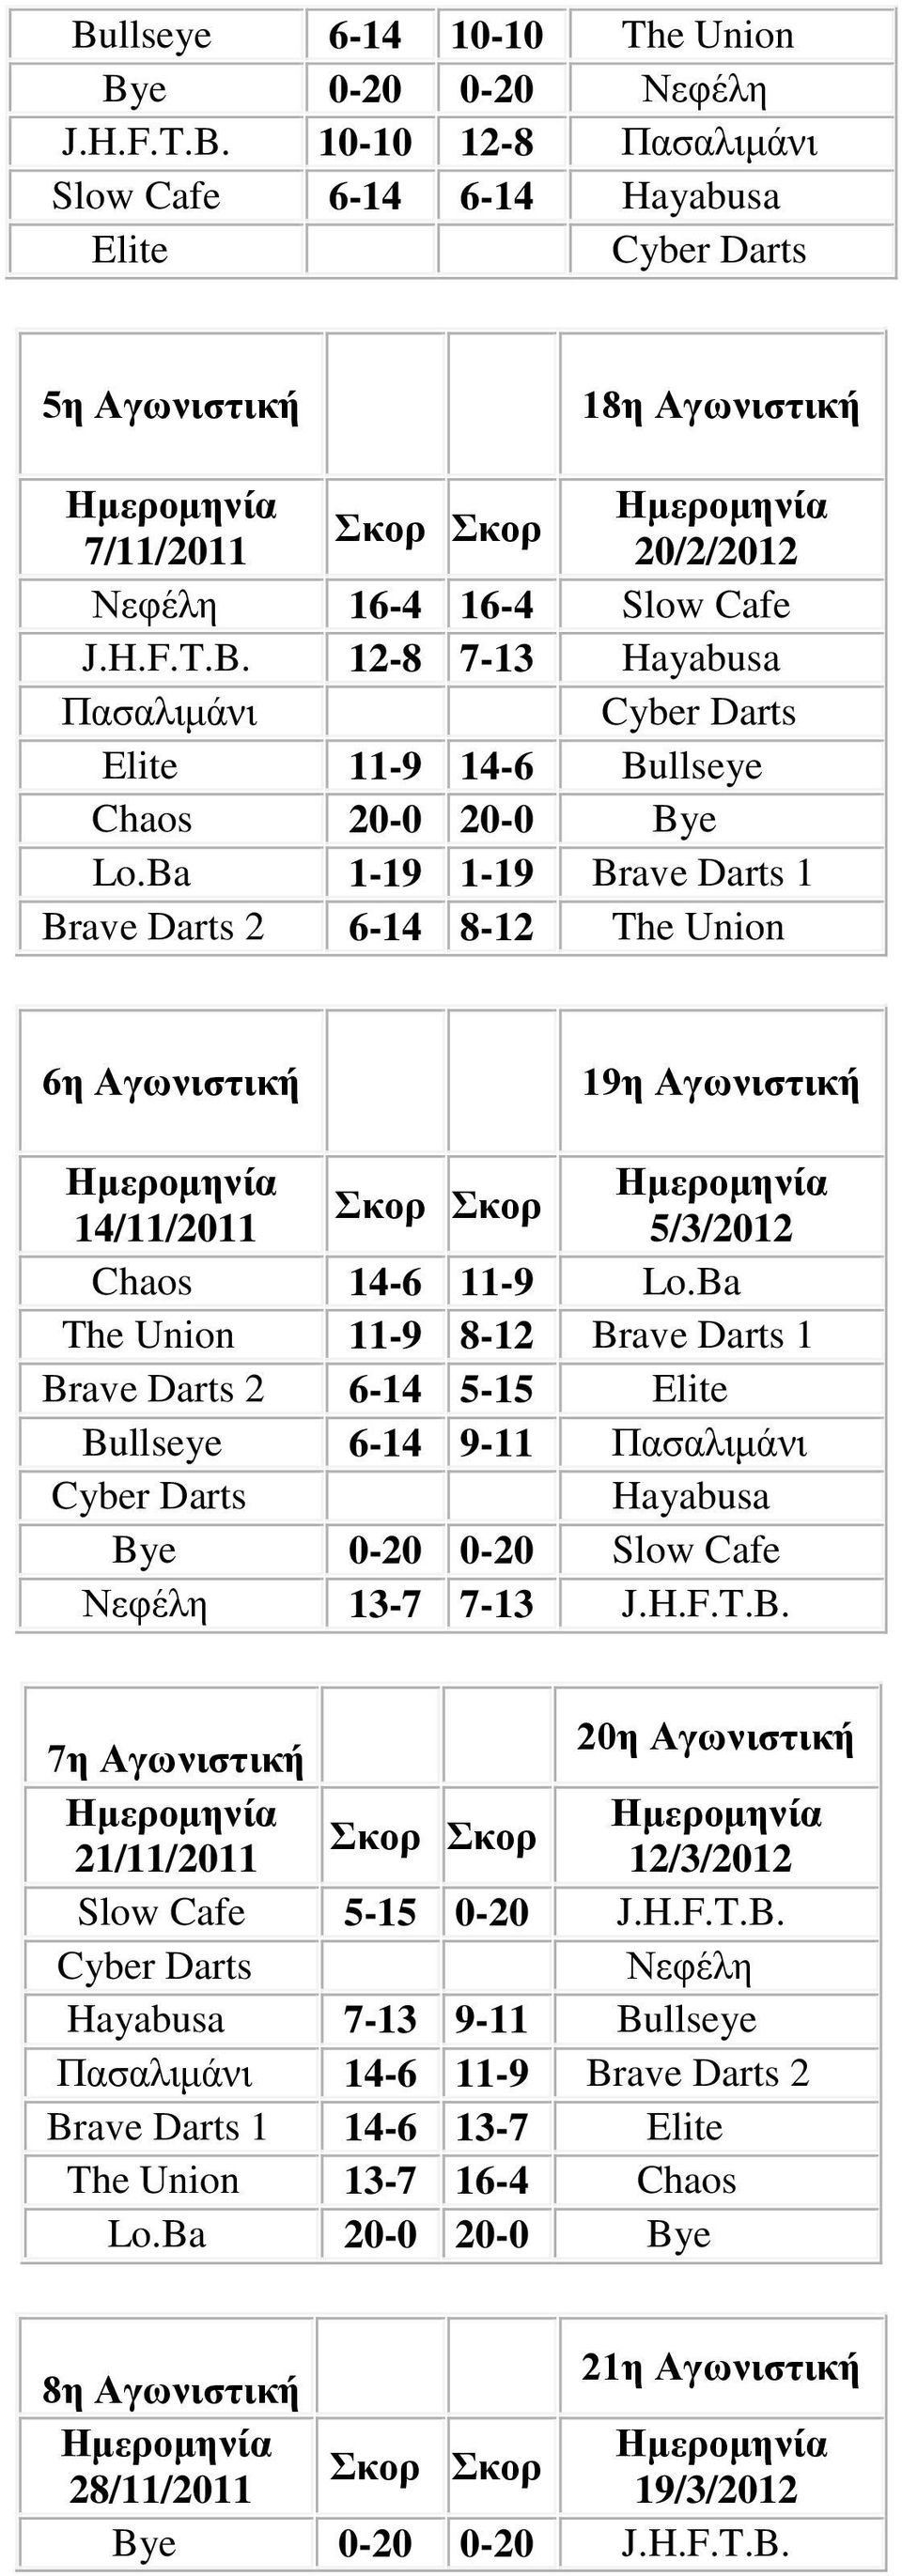 Ba The Union 11-9 8-12 Brave Darts 1 Brave Darts 2 6-14 5-15 Elite Bullseye 6-14 9-11 Πασαλιμάνι Hayabusa Bye 0-20 0-20 Slow Cafe Νεφέλη 13-7 7-13 J.H.F.T.B. 7η Αγωνιστική 20η Αγωνιστική 21/11/2011 12/3/2012 Slow Cafe 5-15 0-20 J.